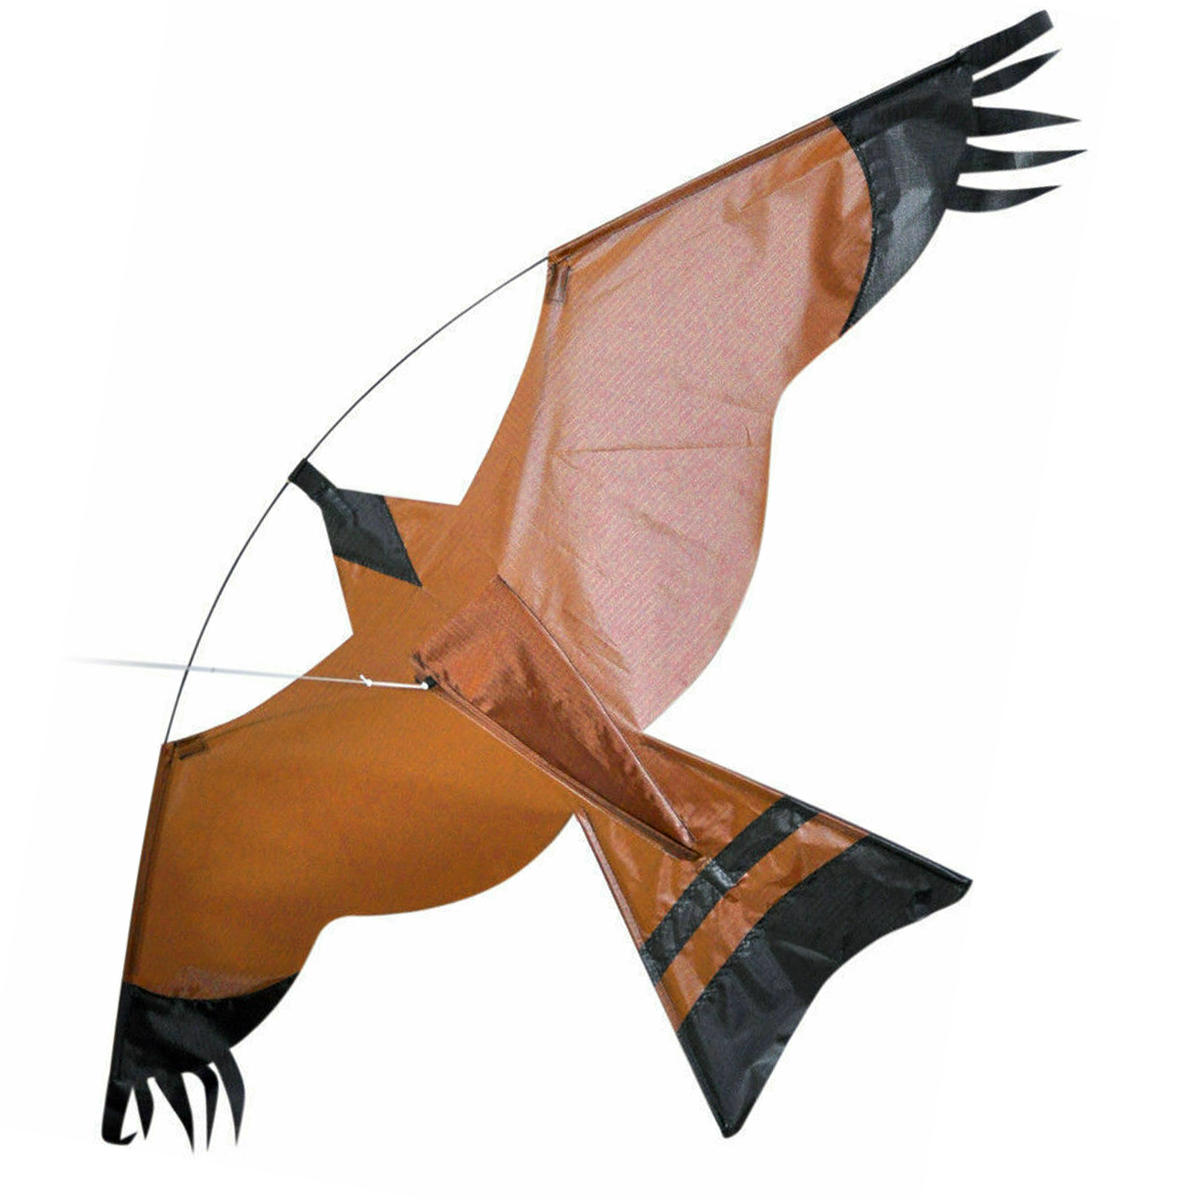 Emulation Flying Hawk Kite Bird Scarer For Garden Scarecrow Yard House Home Decorations